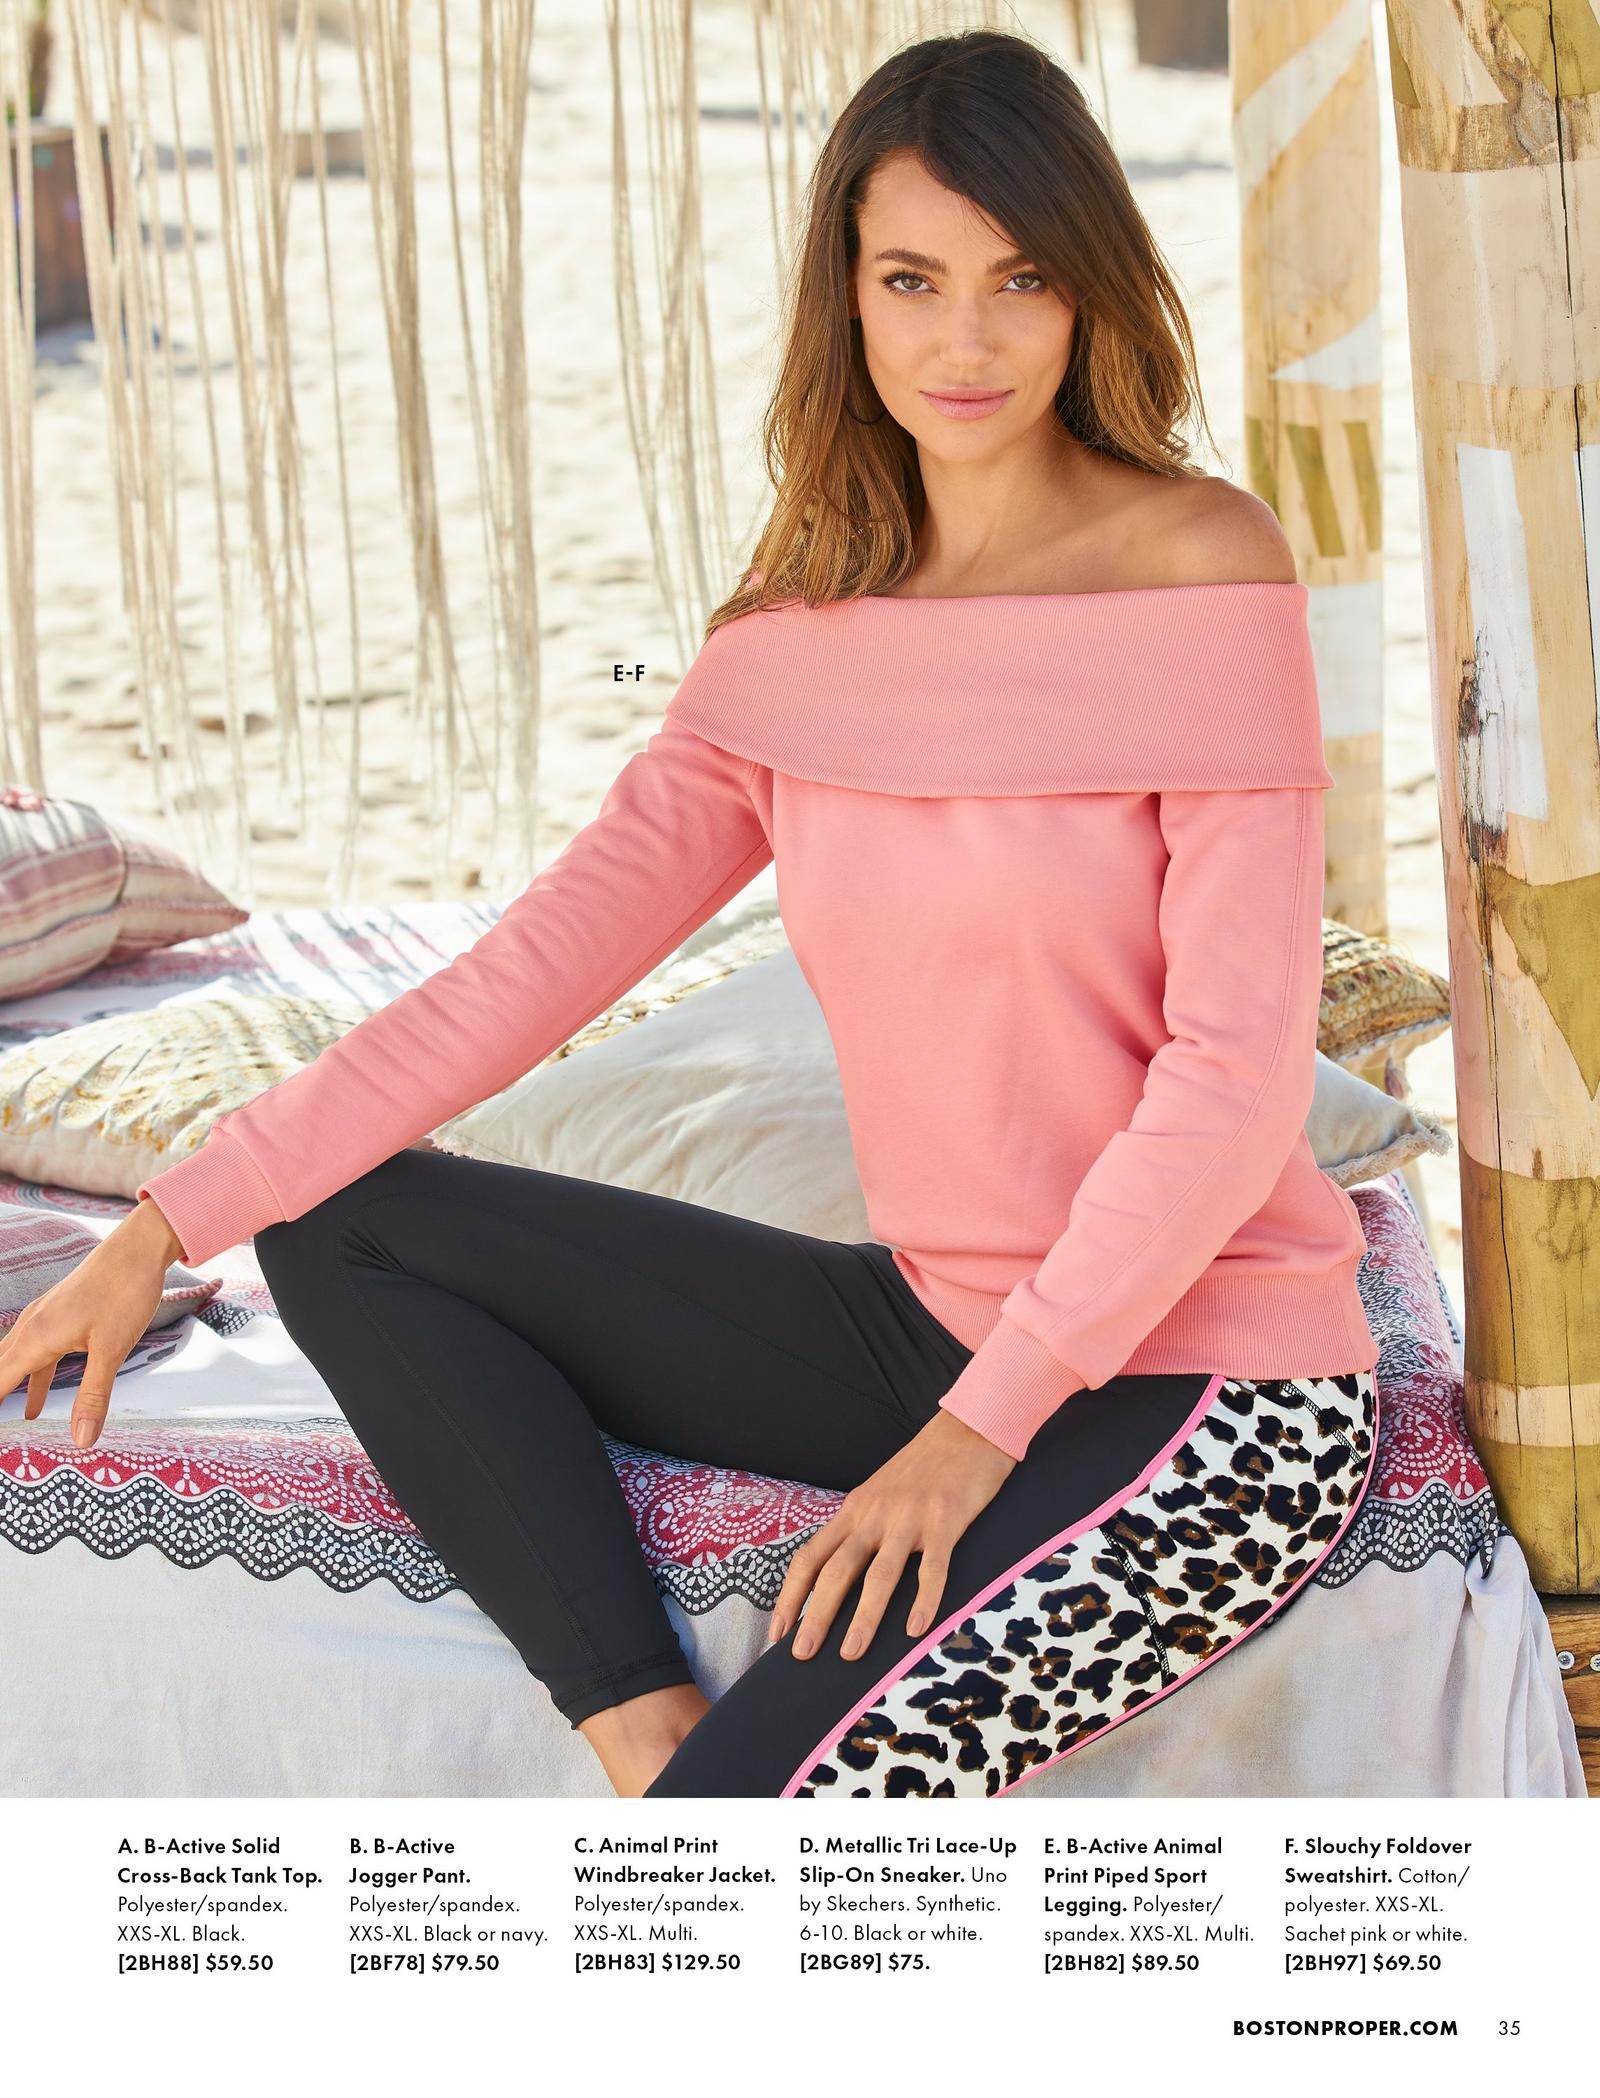 model wearing a pink fold over off-the-shoulder sweatshirt and leopard print leggings.